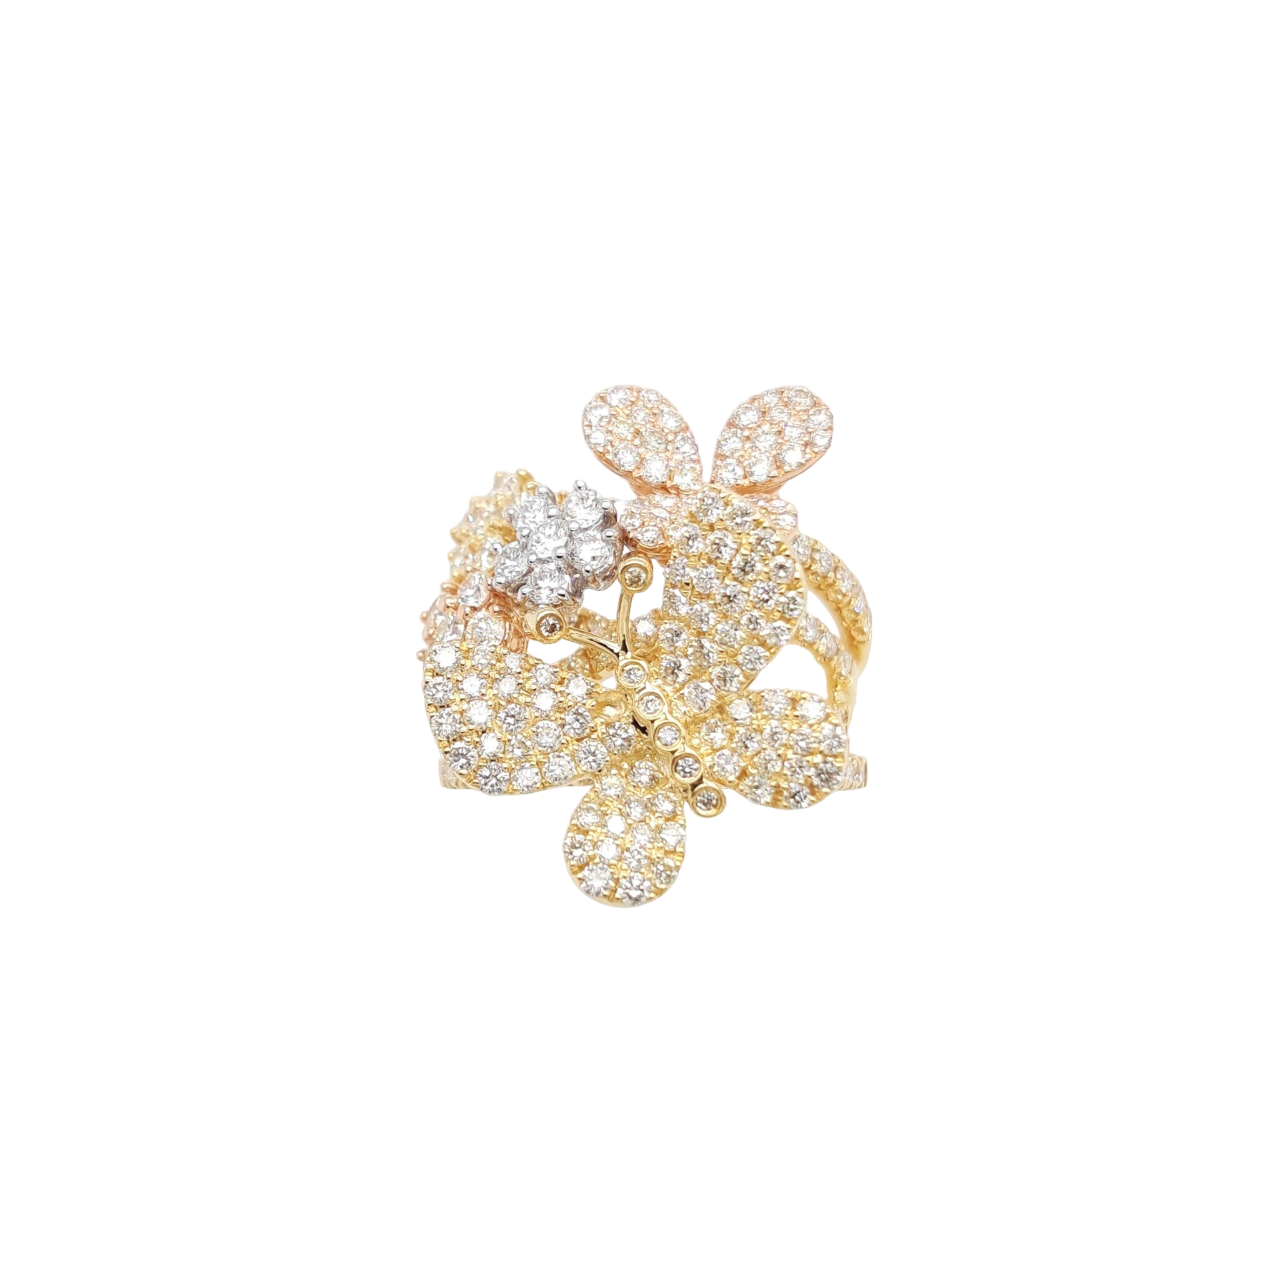 Ladies Tri-Color Diamond Flower Ring 2.49 Carats